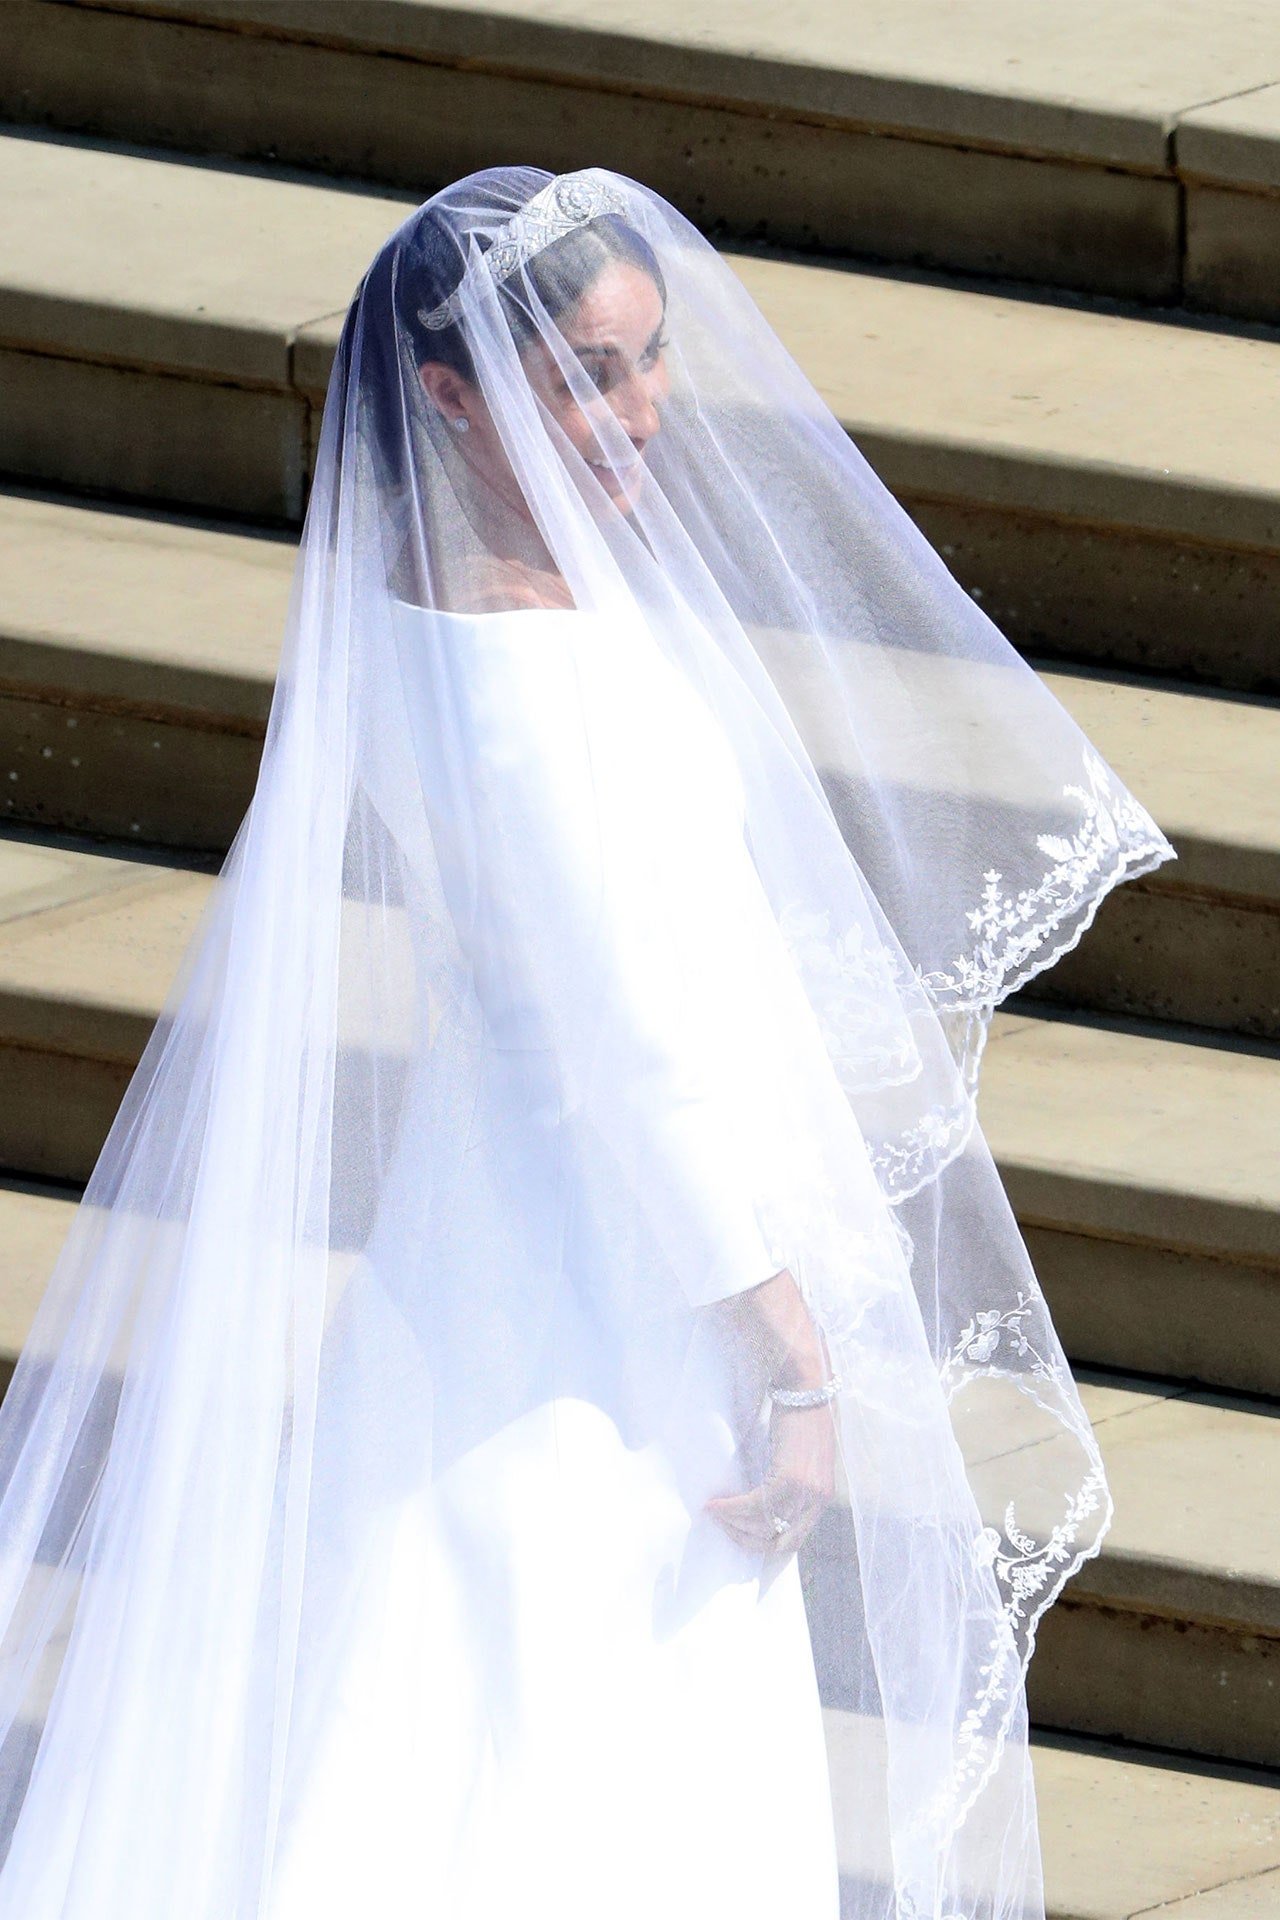 Os vestidos de noiva da realeza britânica mais icônicos » STEAL THE LOOK